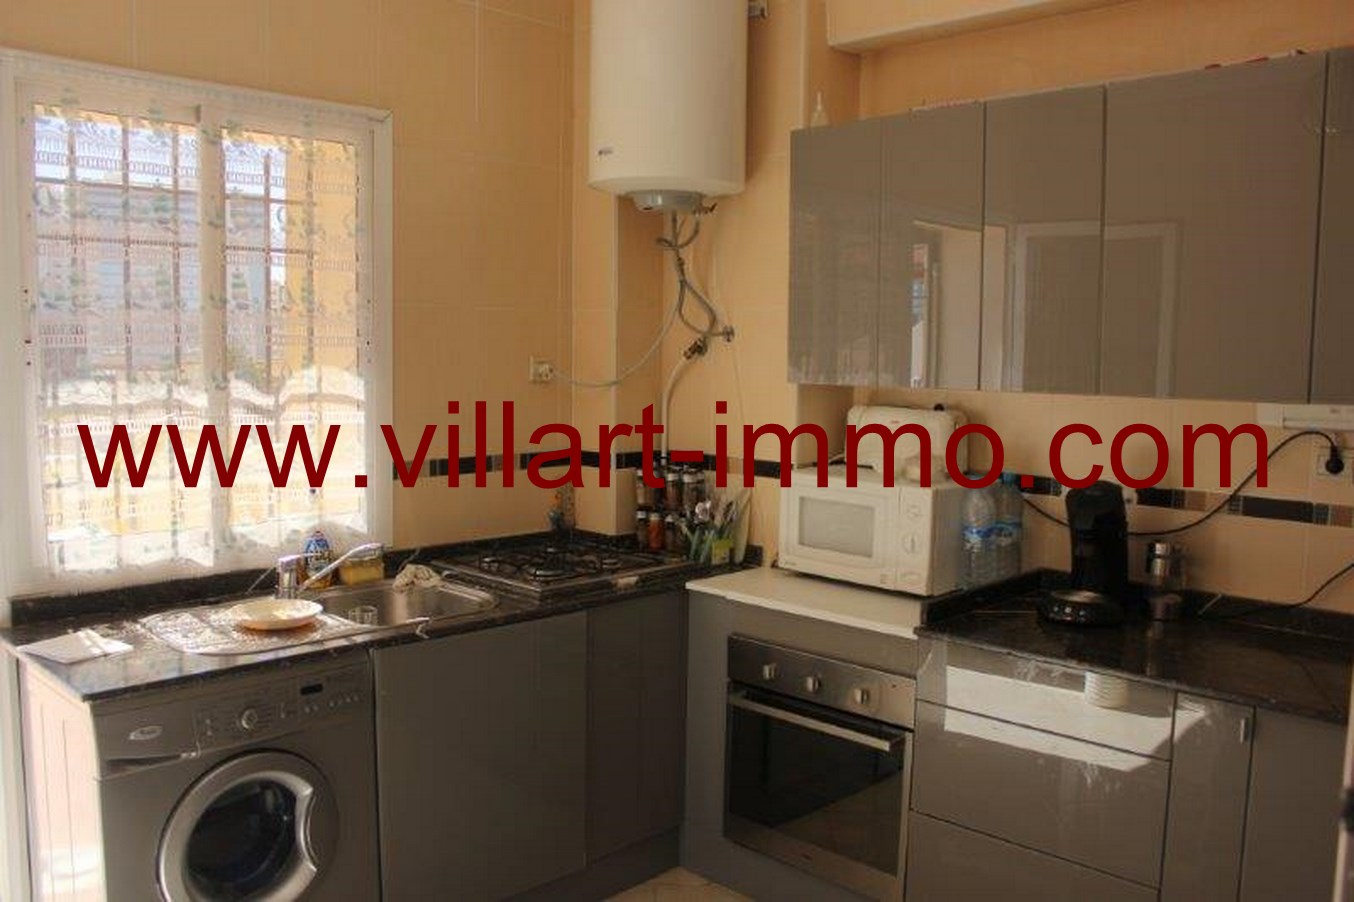 3-Location-Appartement-meublé-Tanger-cuisine-L651-Villart-immo